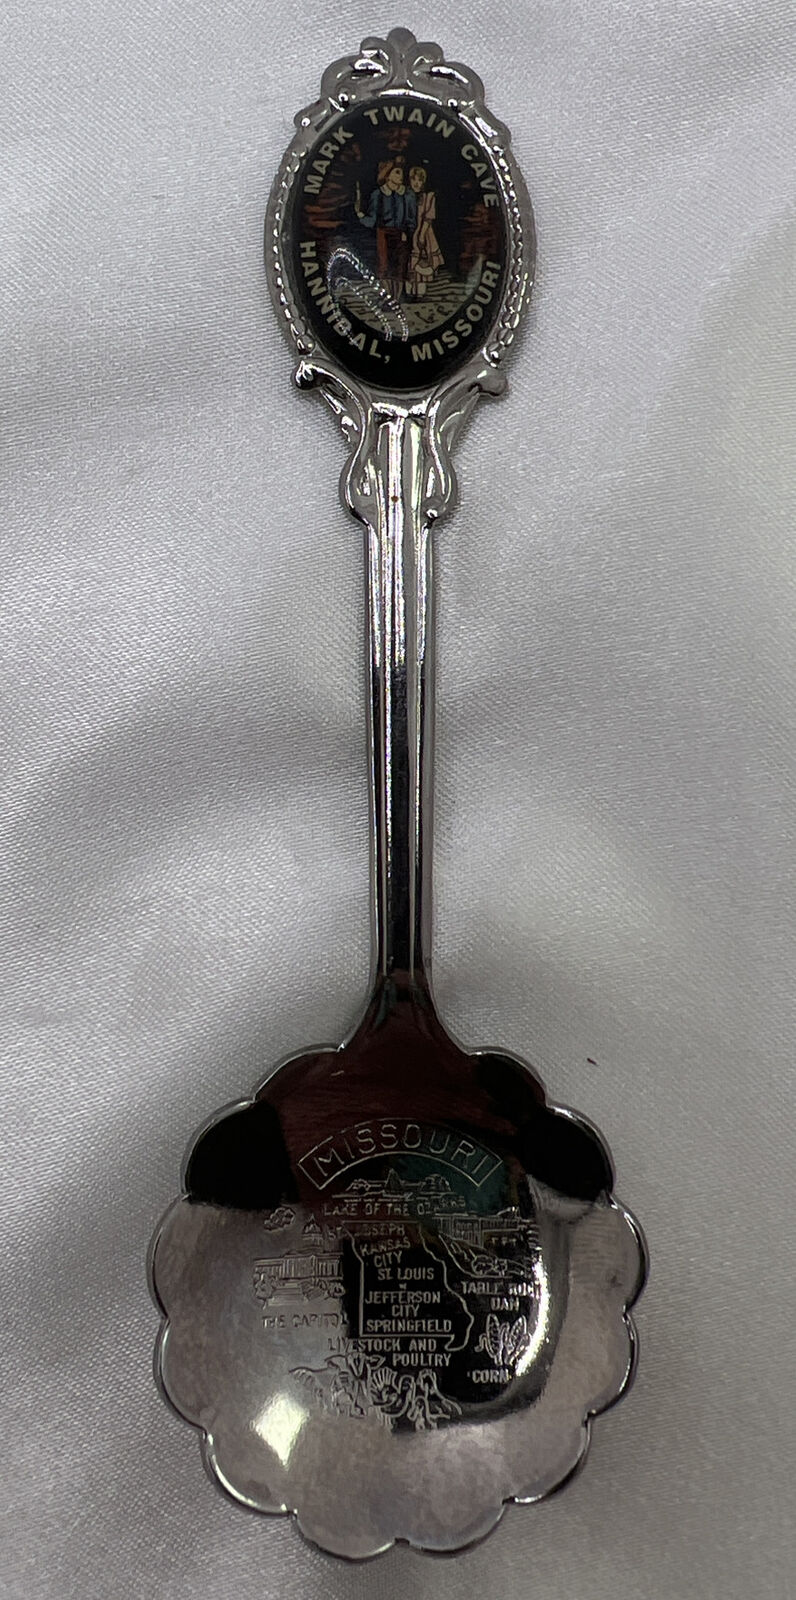 Vintage Mark Twain Cave Hannibal Missouri Souvenir Spoon US Collectible